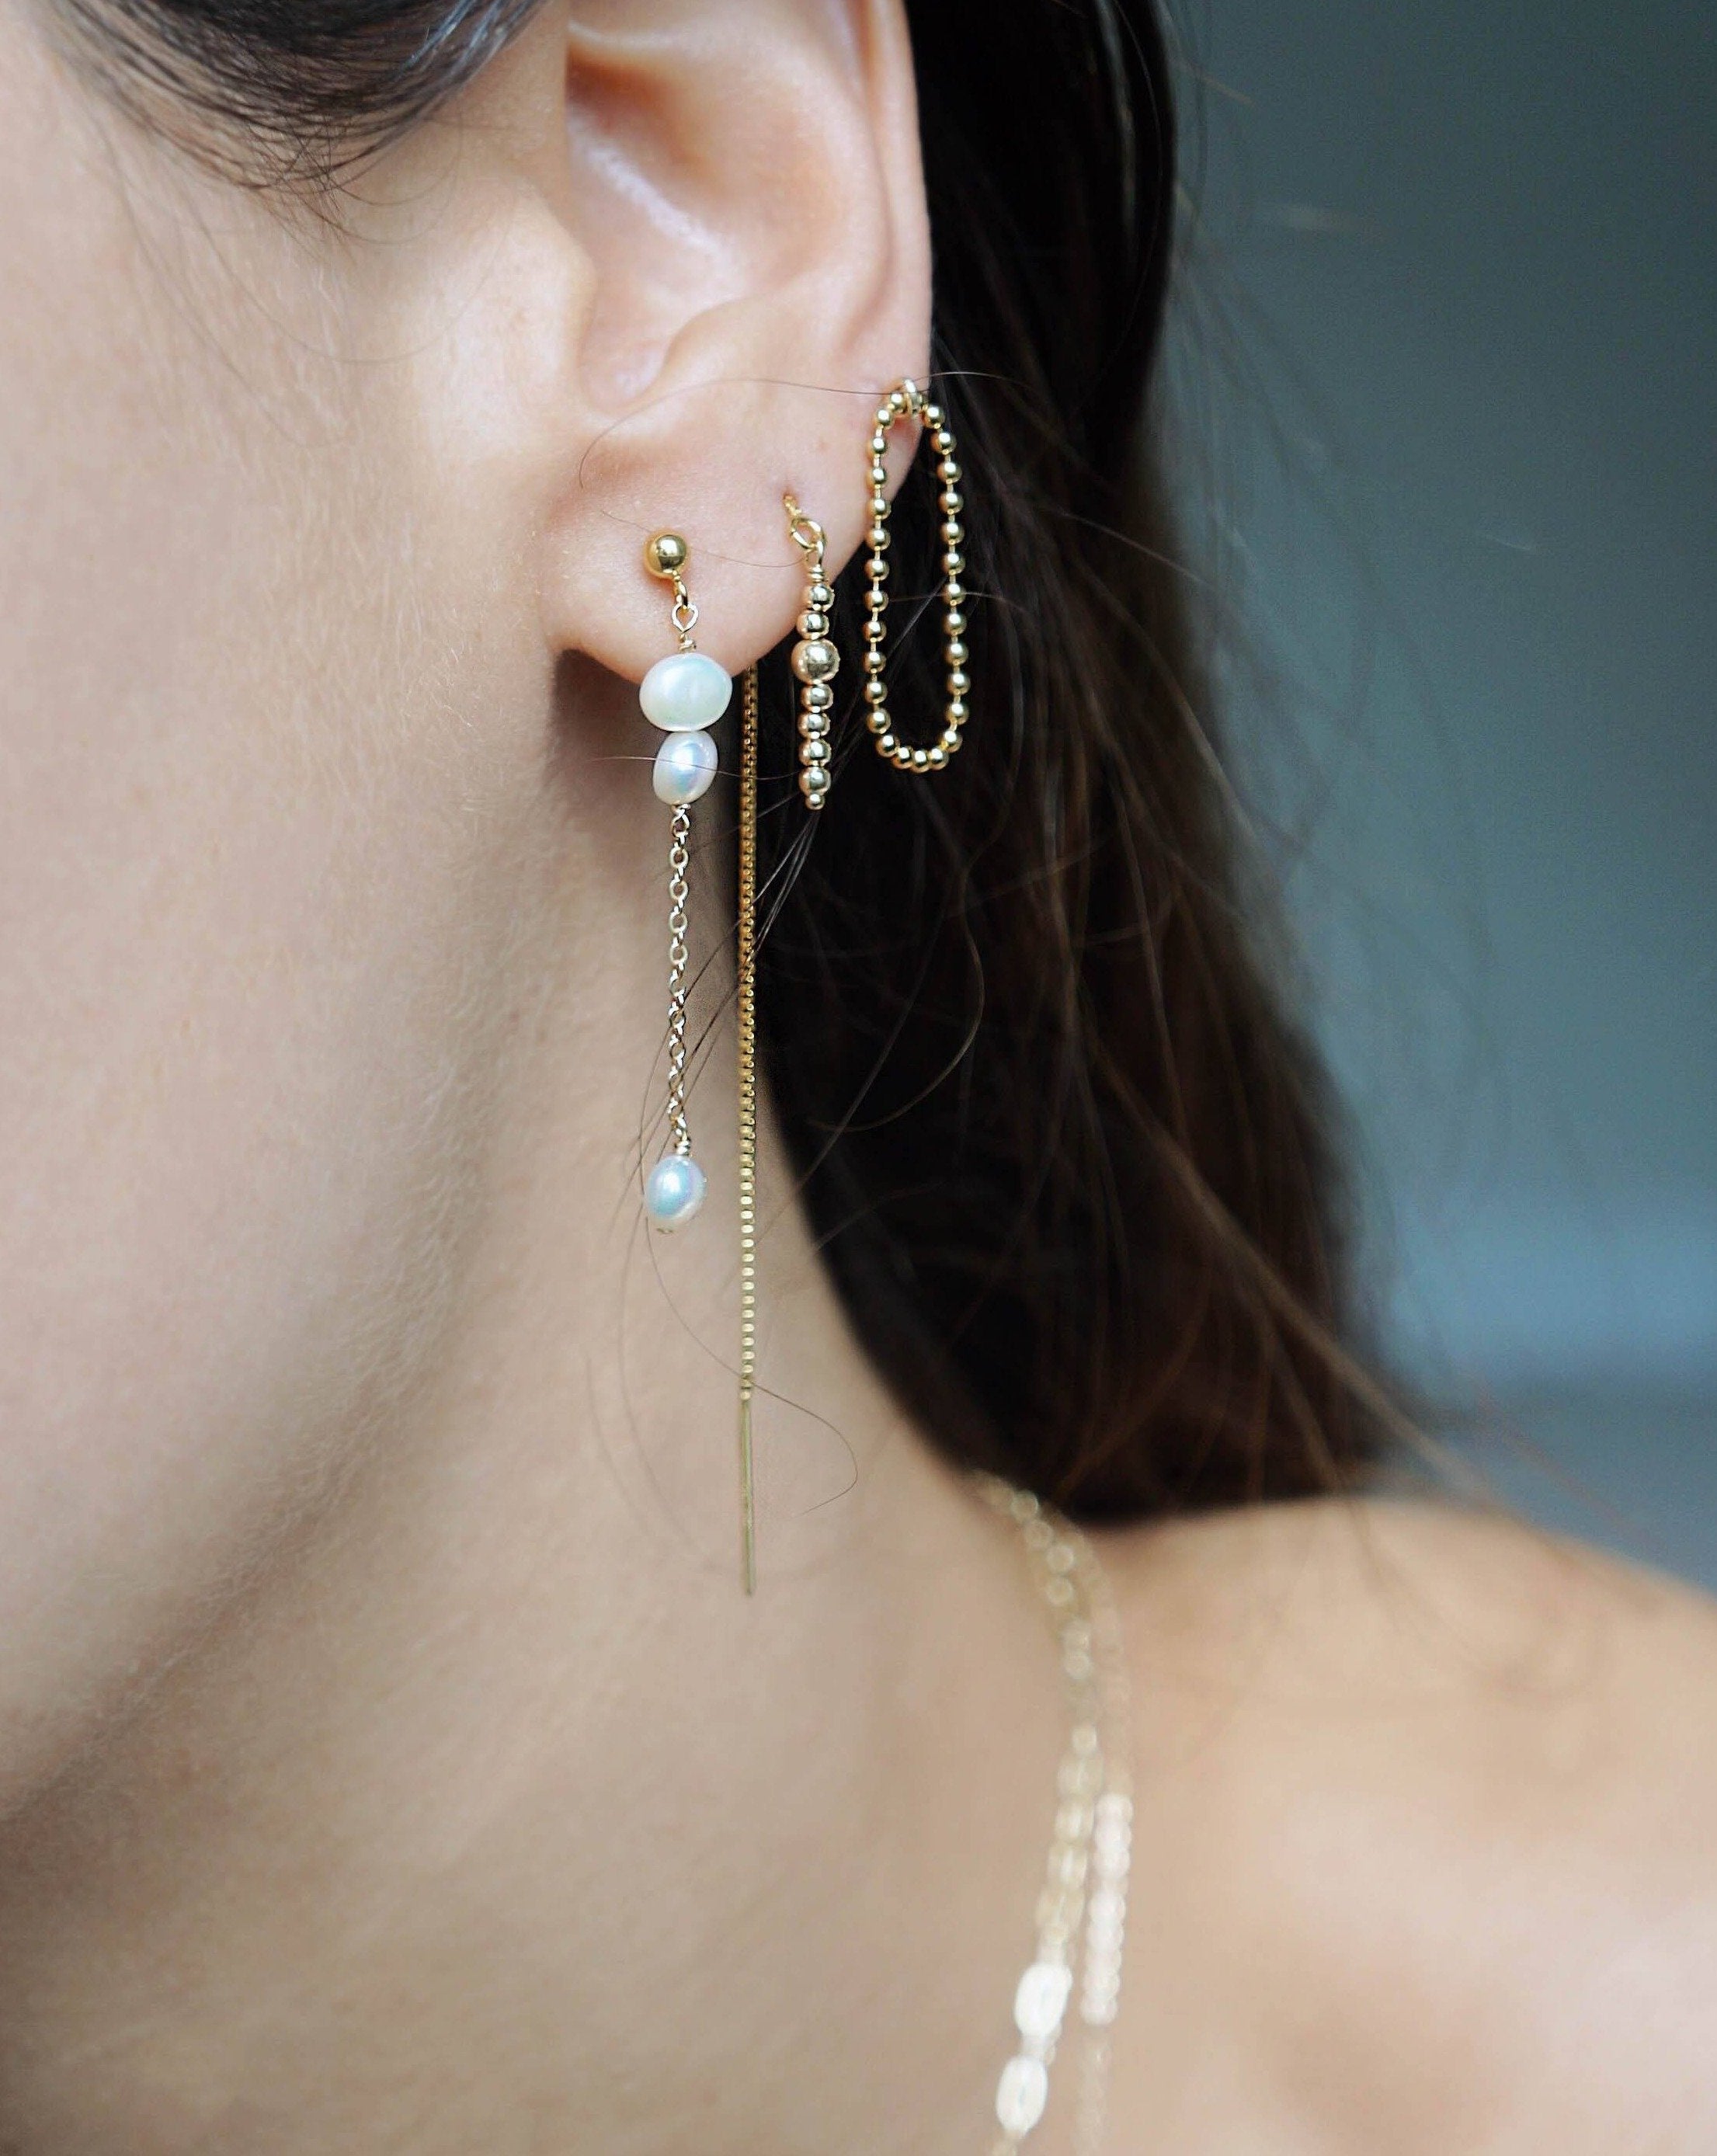 Laleh Earrings by KOZAKH. 3mm ball stud drop earrings in 14K Gold Filled, featuring 4x5mm irregular freshwater Pearls.